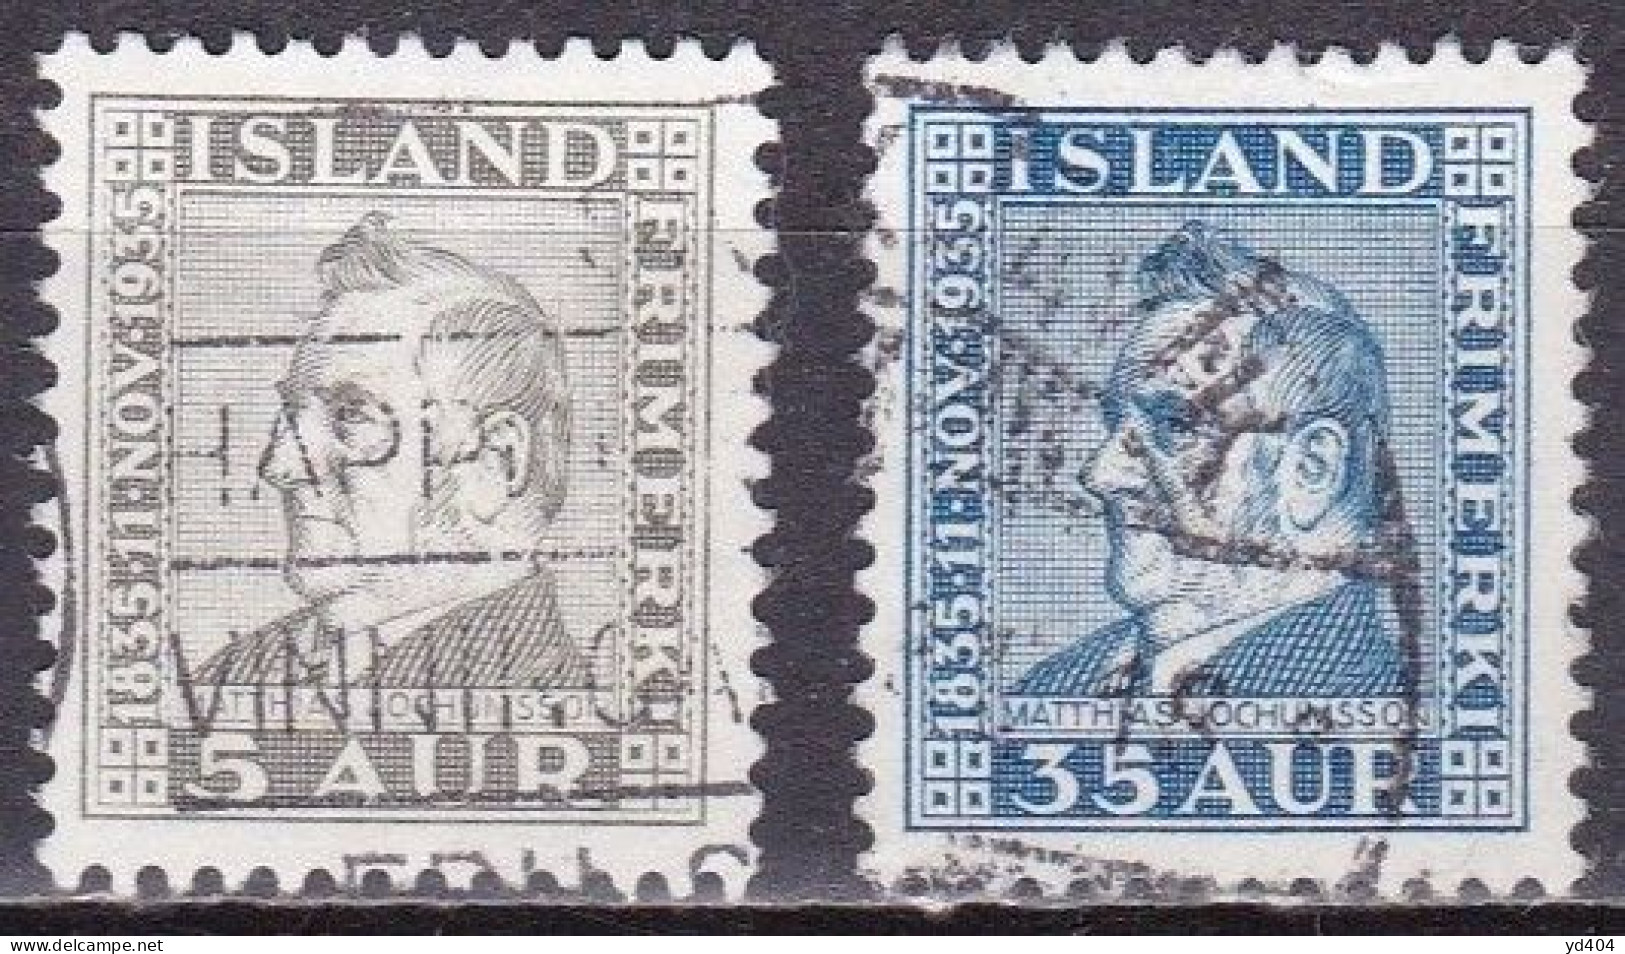 IS031B – ISLANDE – ICELAND – 1935 – MATHIAS JOCHUMSSON – SG # 217-219 USED - Used Stamps